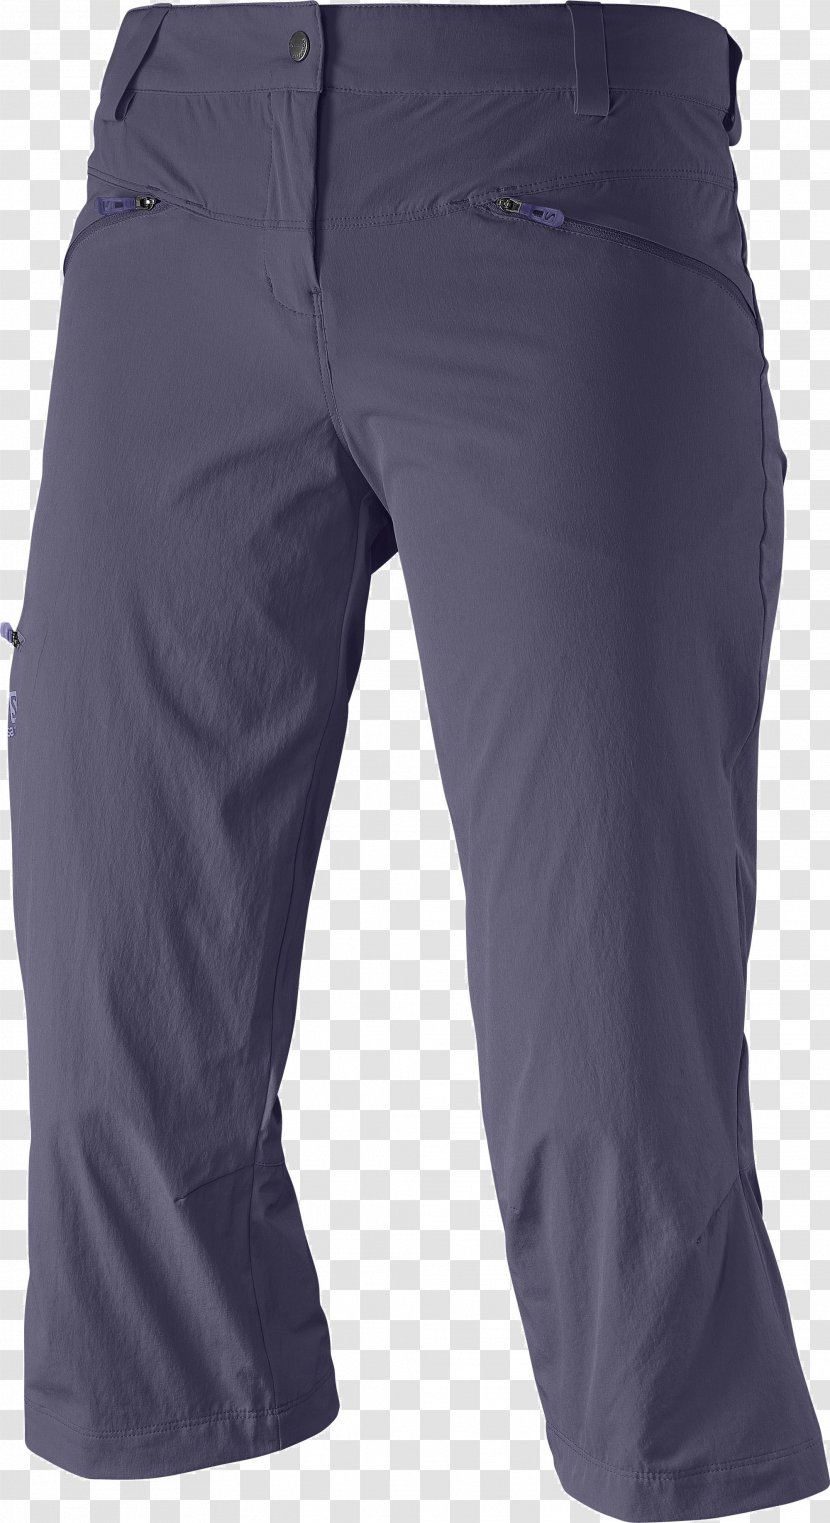 Salomon Group Pants Shorts Factory 